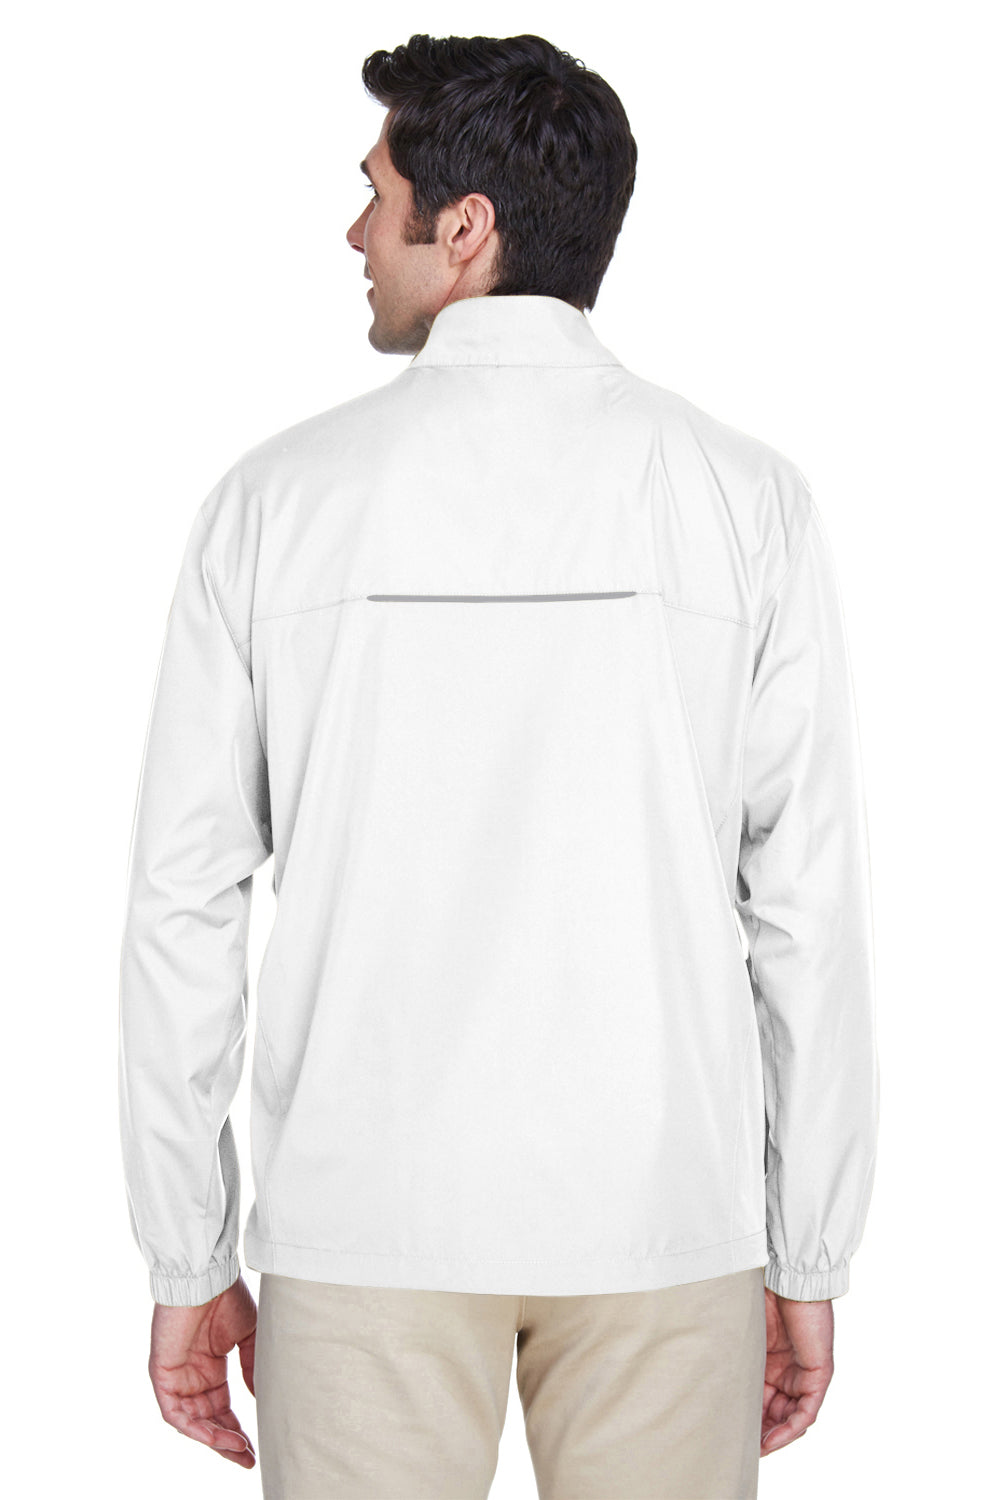 Core 365 88183 Mens Motivate Water Resistant Full Zip Jacket White Back